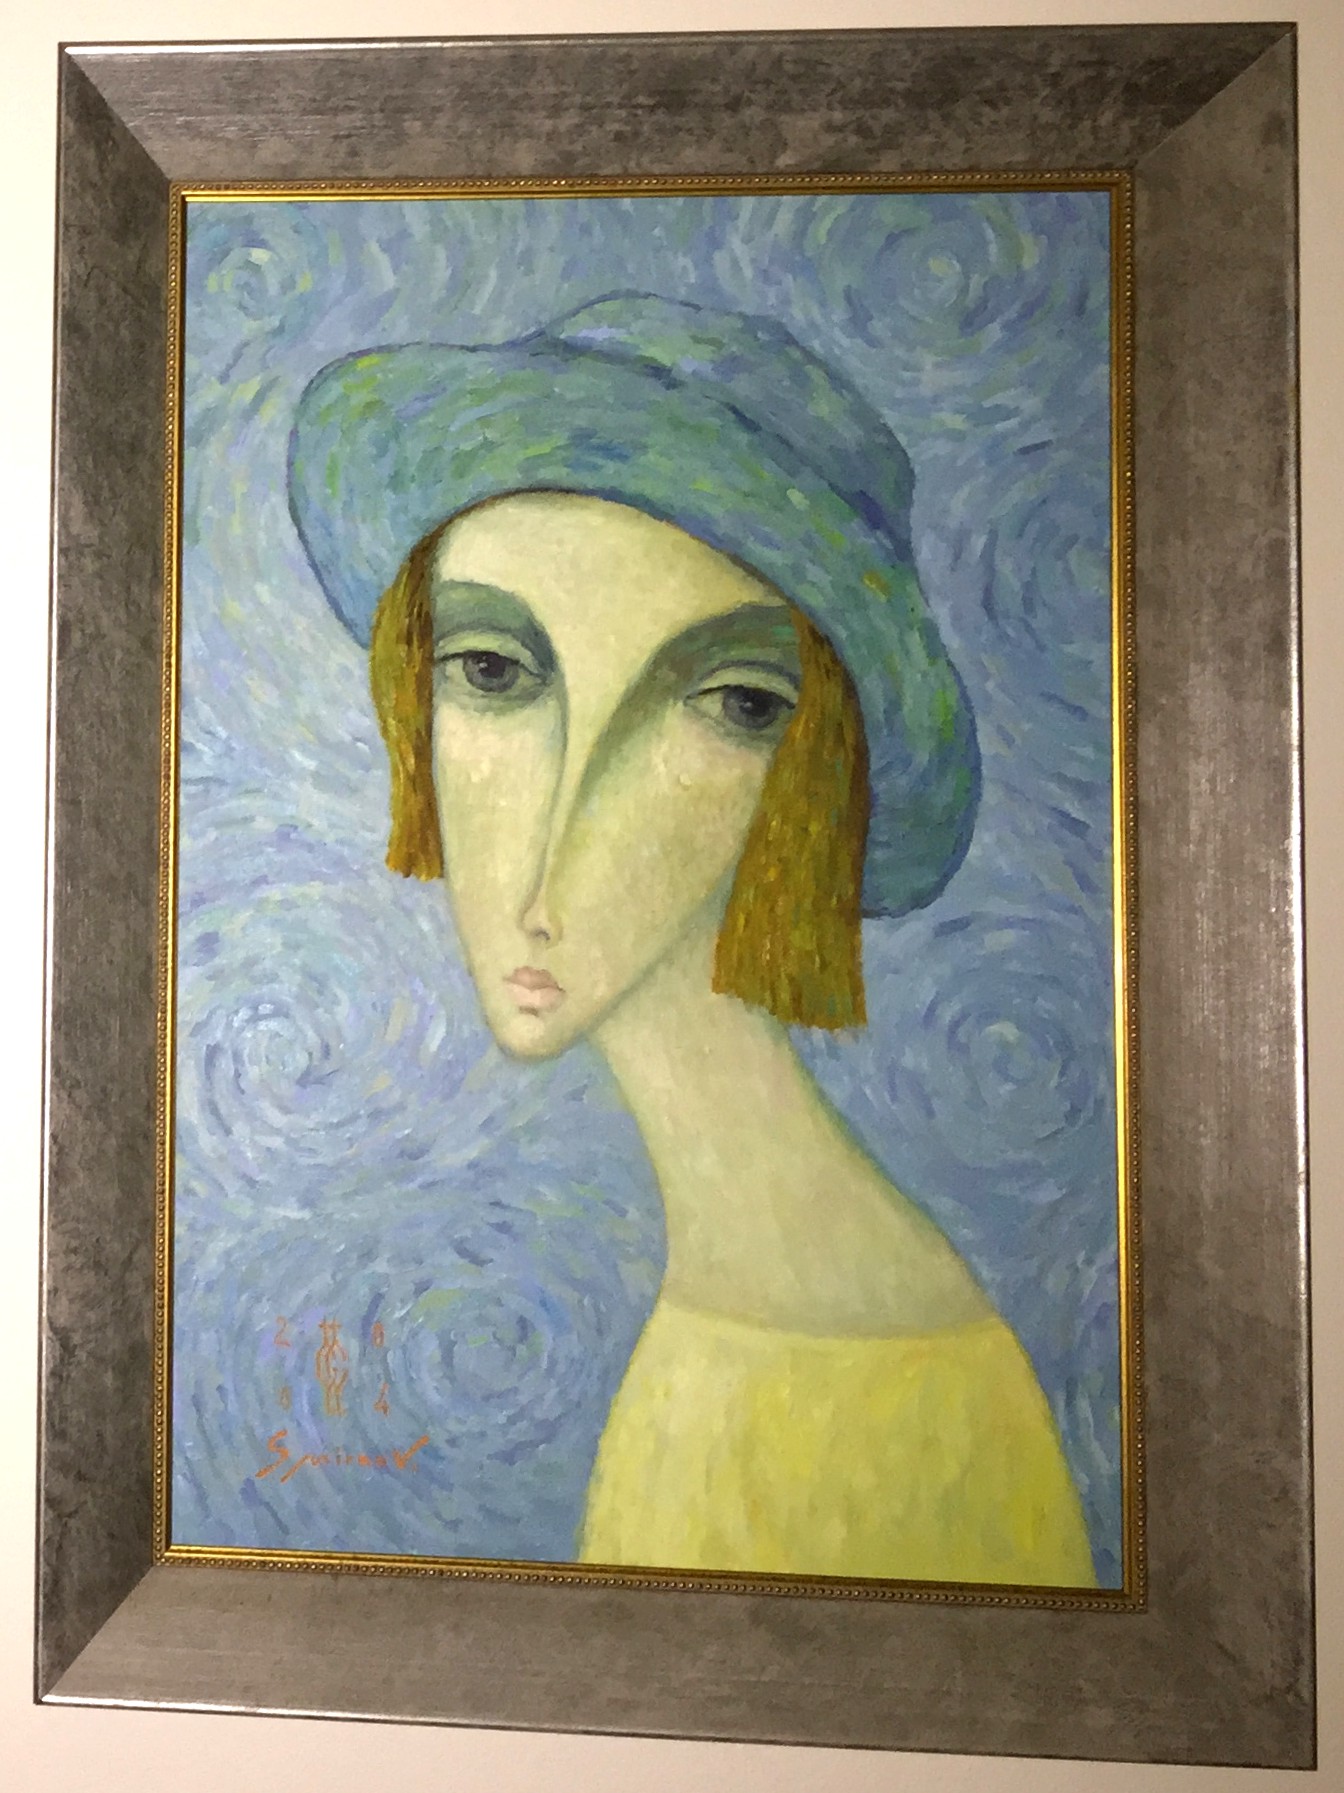 Sergey Smirnov - Girl Original Oil on Linen Painting